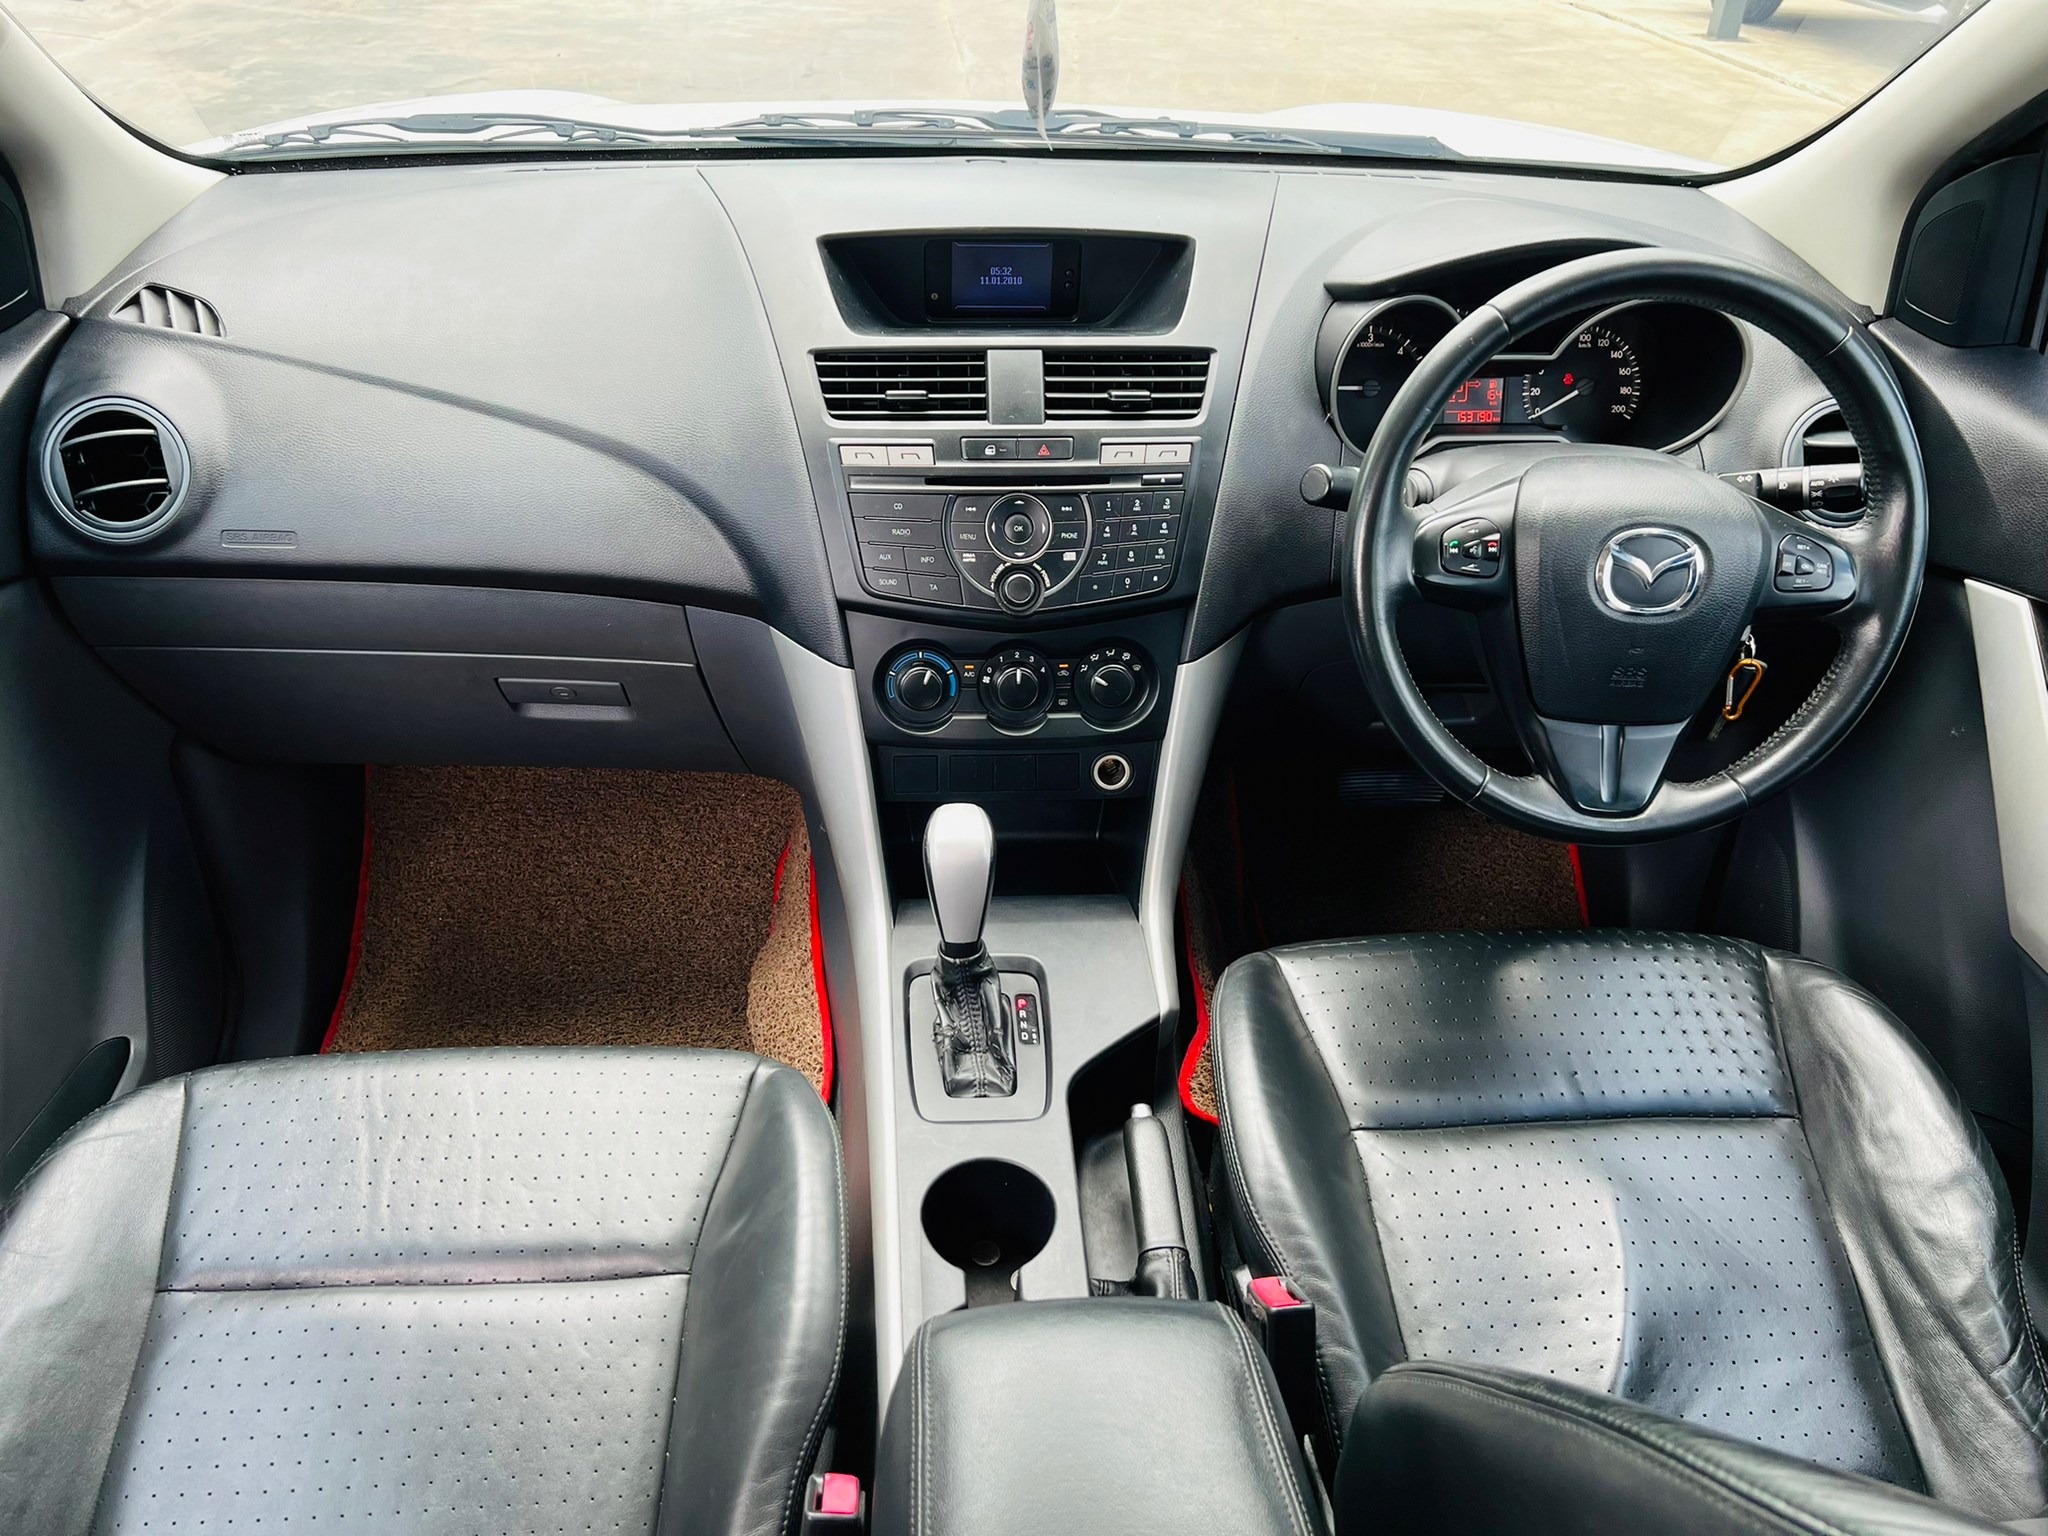 2013 Mazda BT-50 PRO Double Cab (4 ประตู) สีขาว